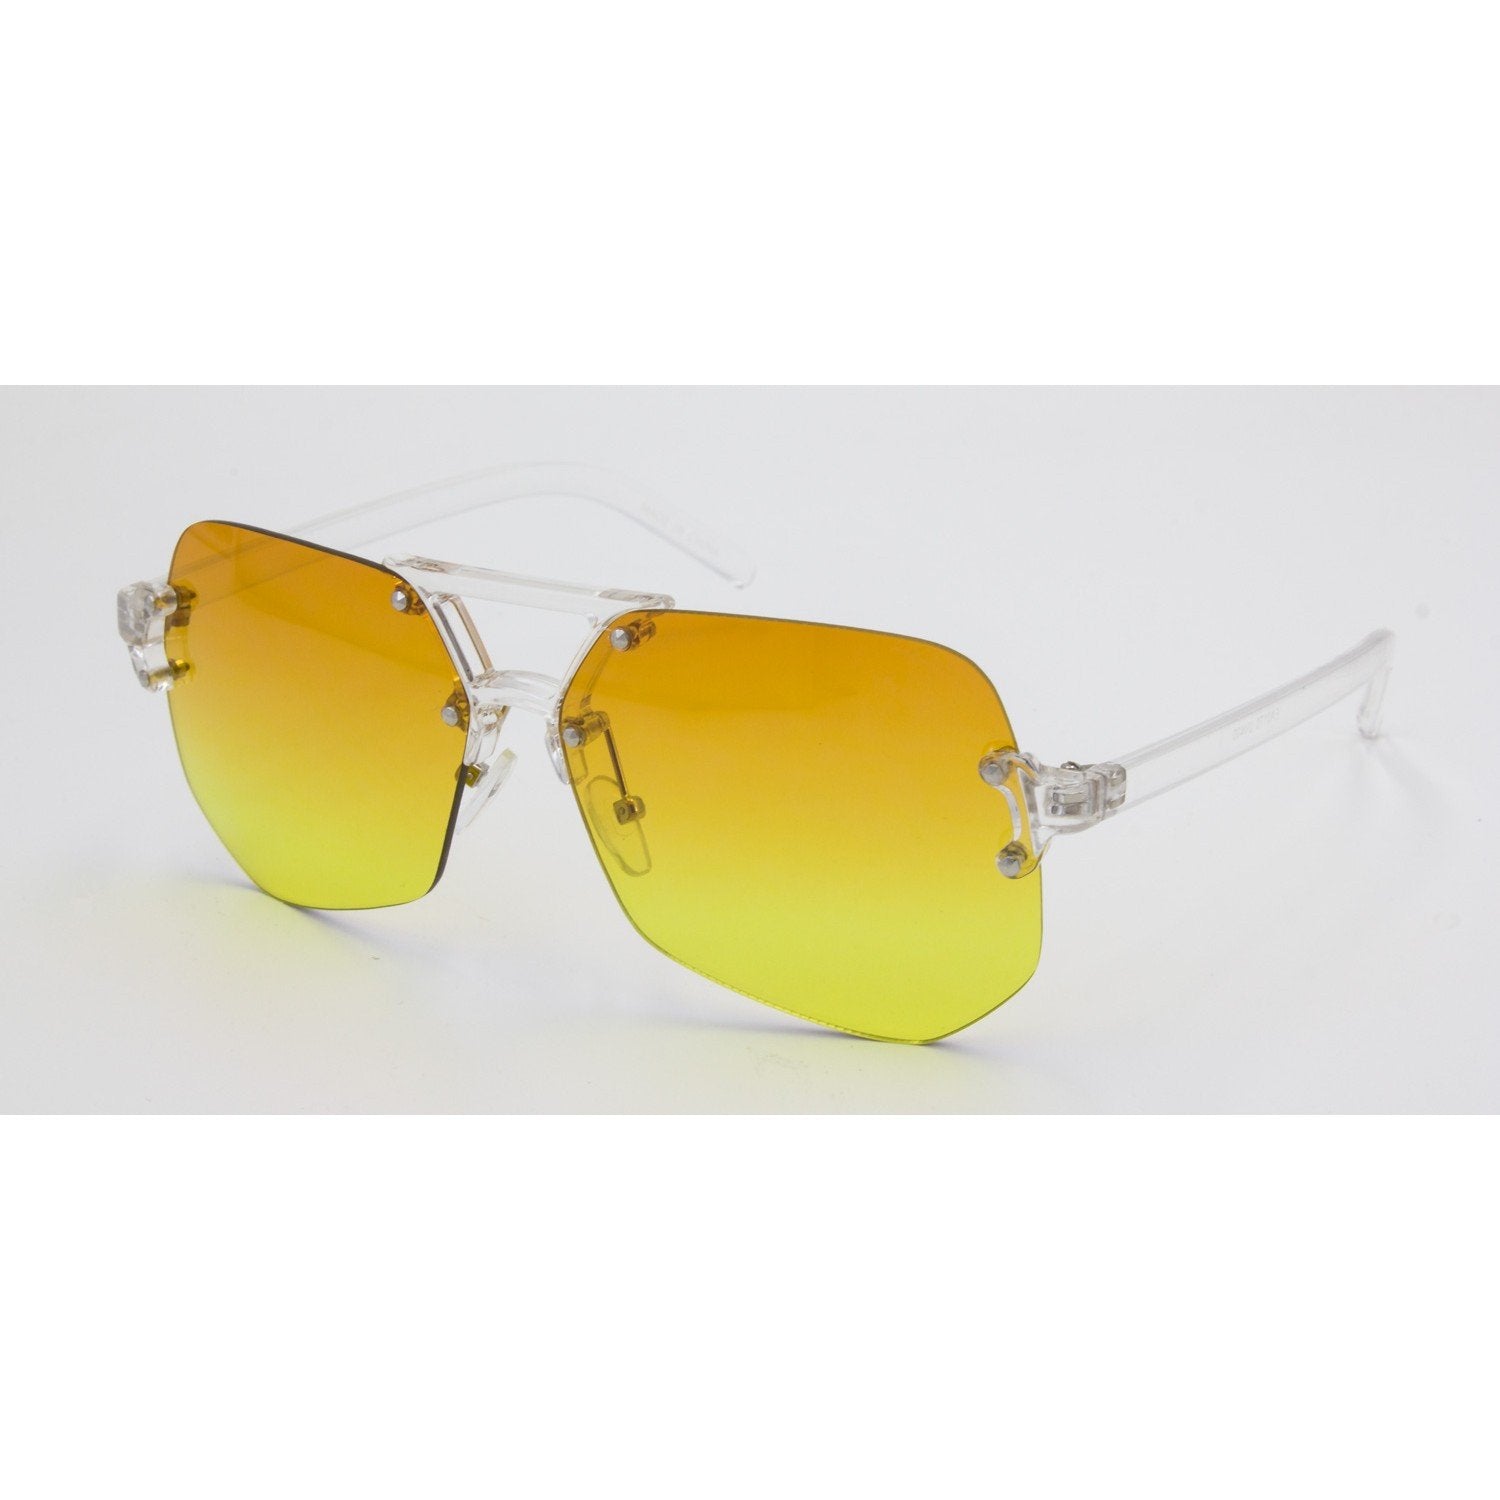 "Glam Girl" Rimless Sunglasses - Weekend Shade Sunglasses